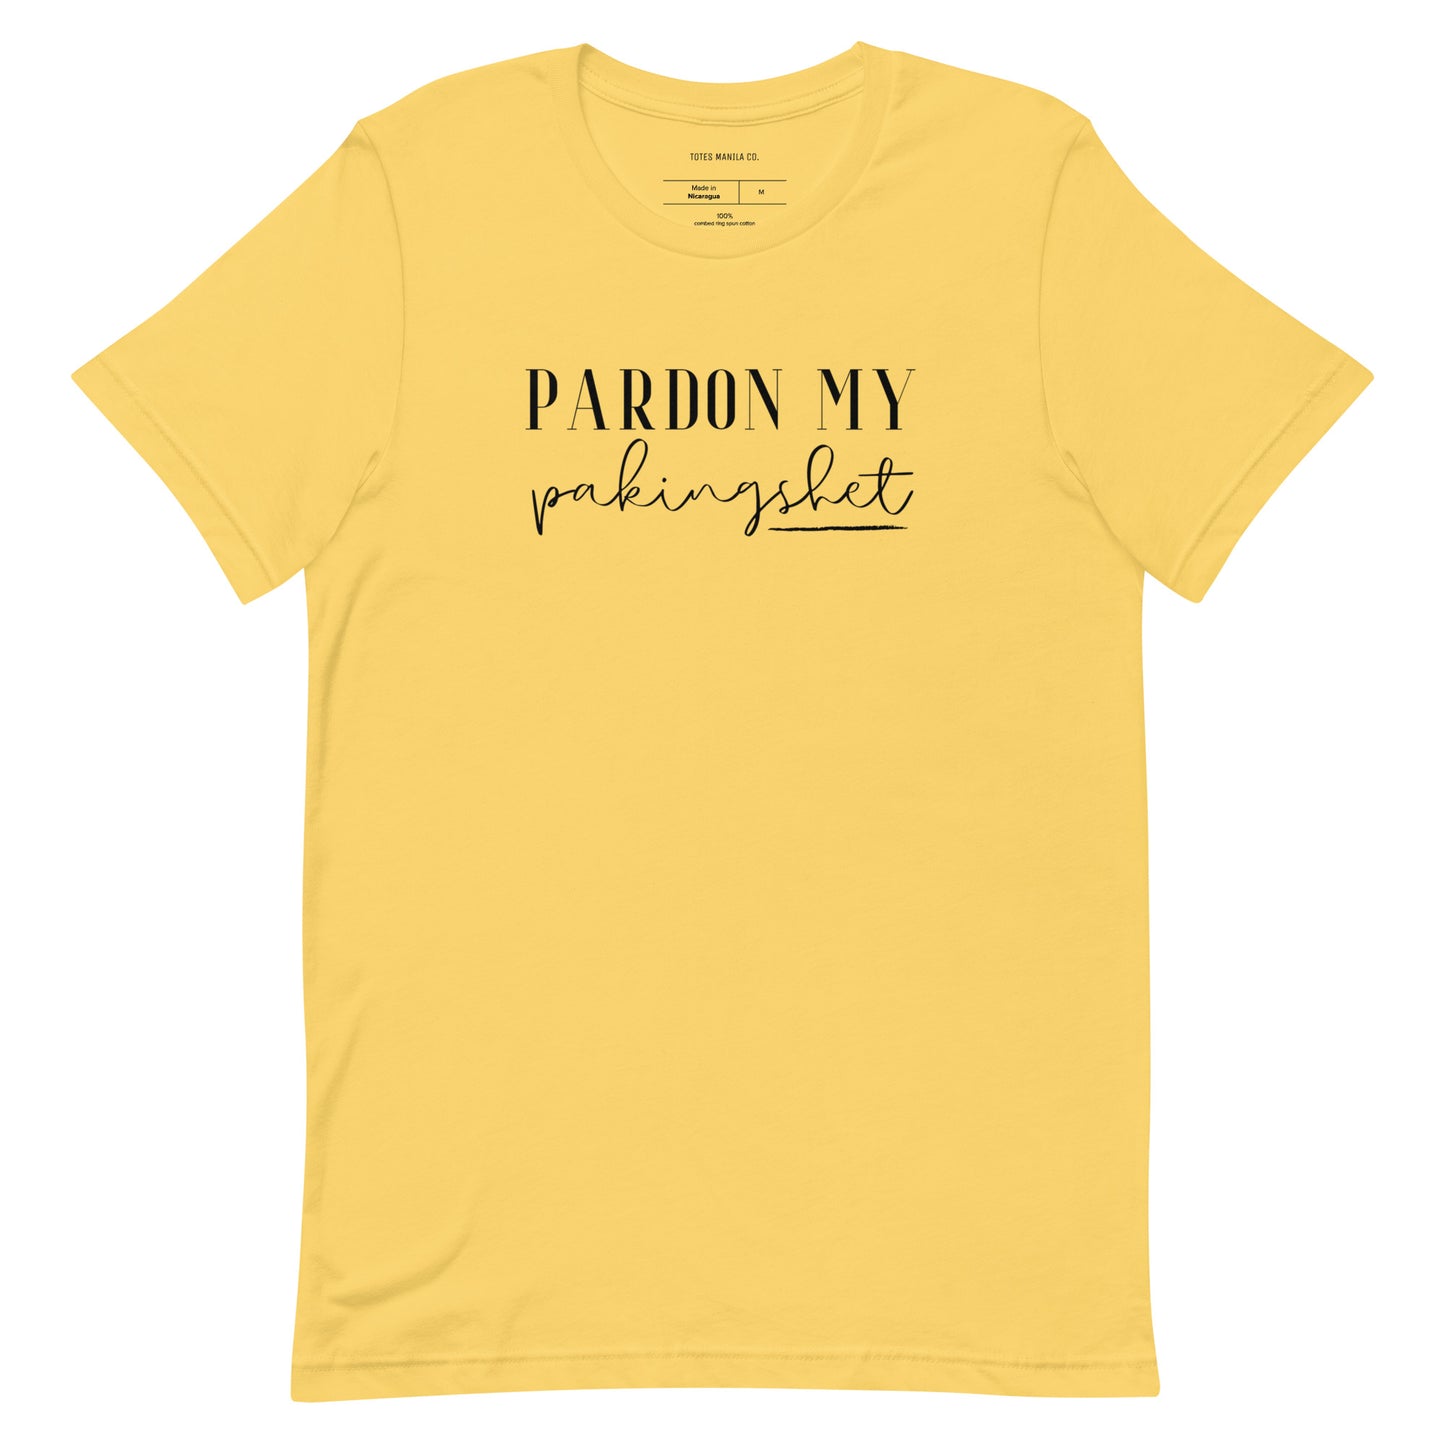 Filipino Shirt Pardon My Pakingshet Funny Merch in color variant Yellow